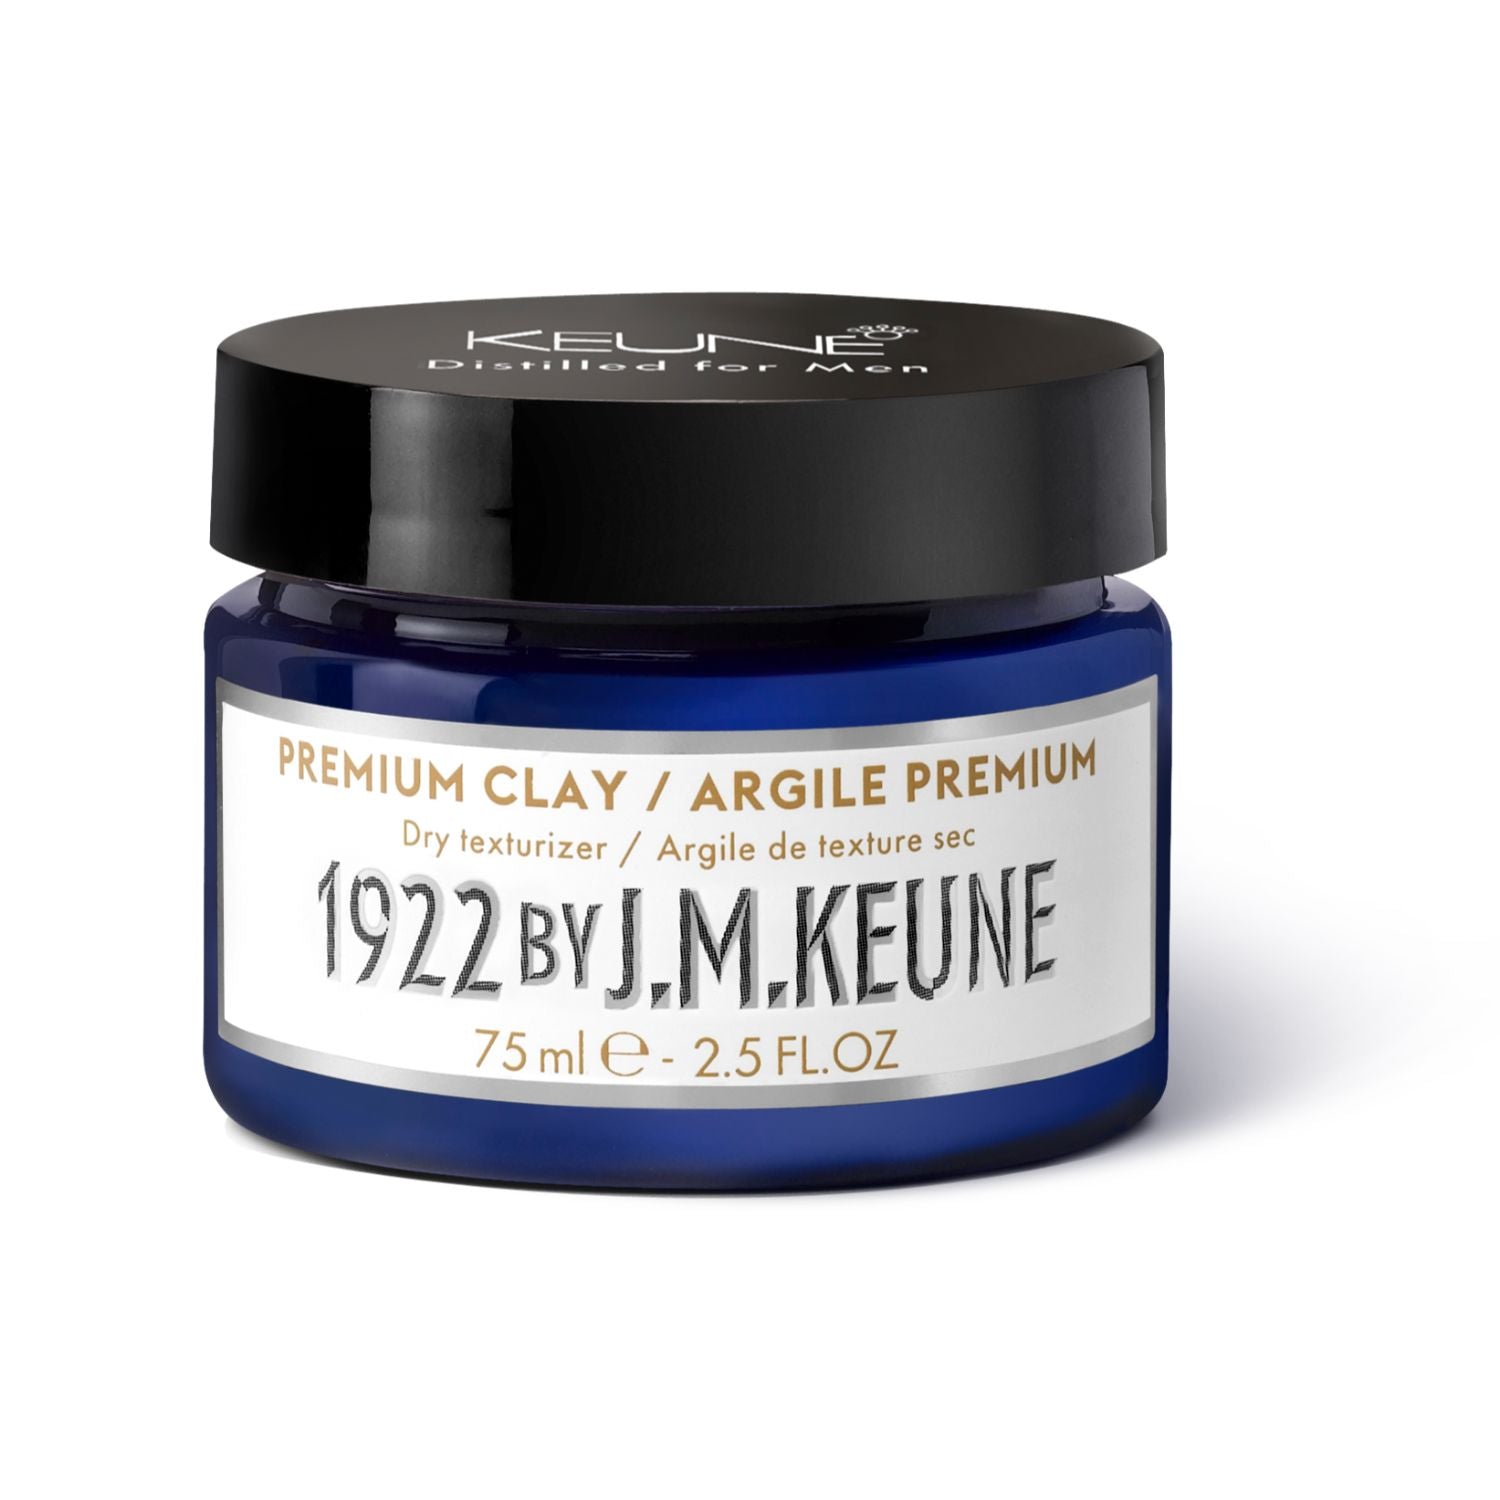 1922 By J.M. Keune Premium Clay